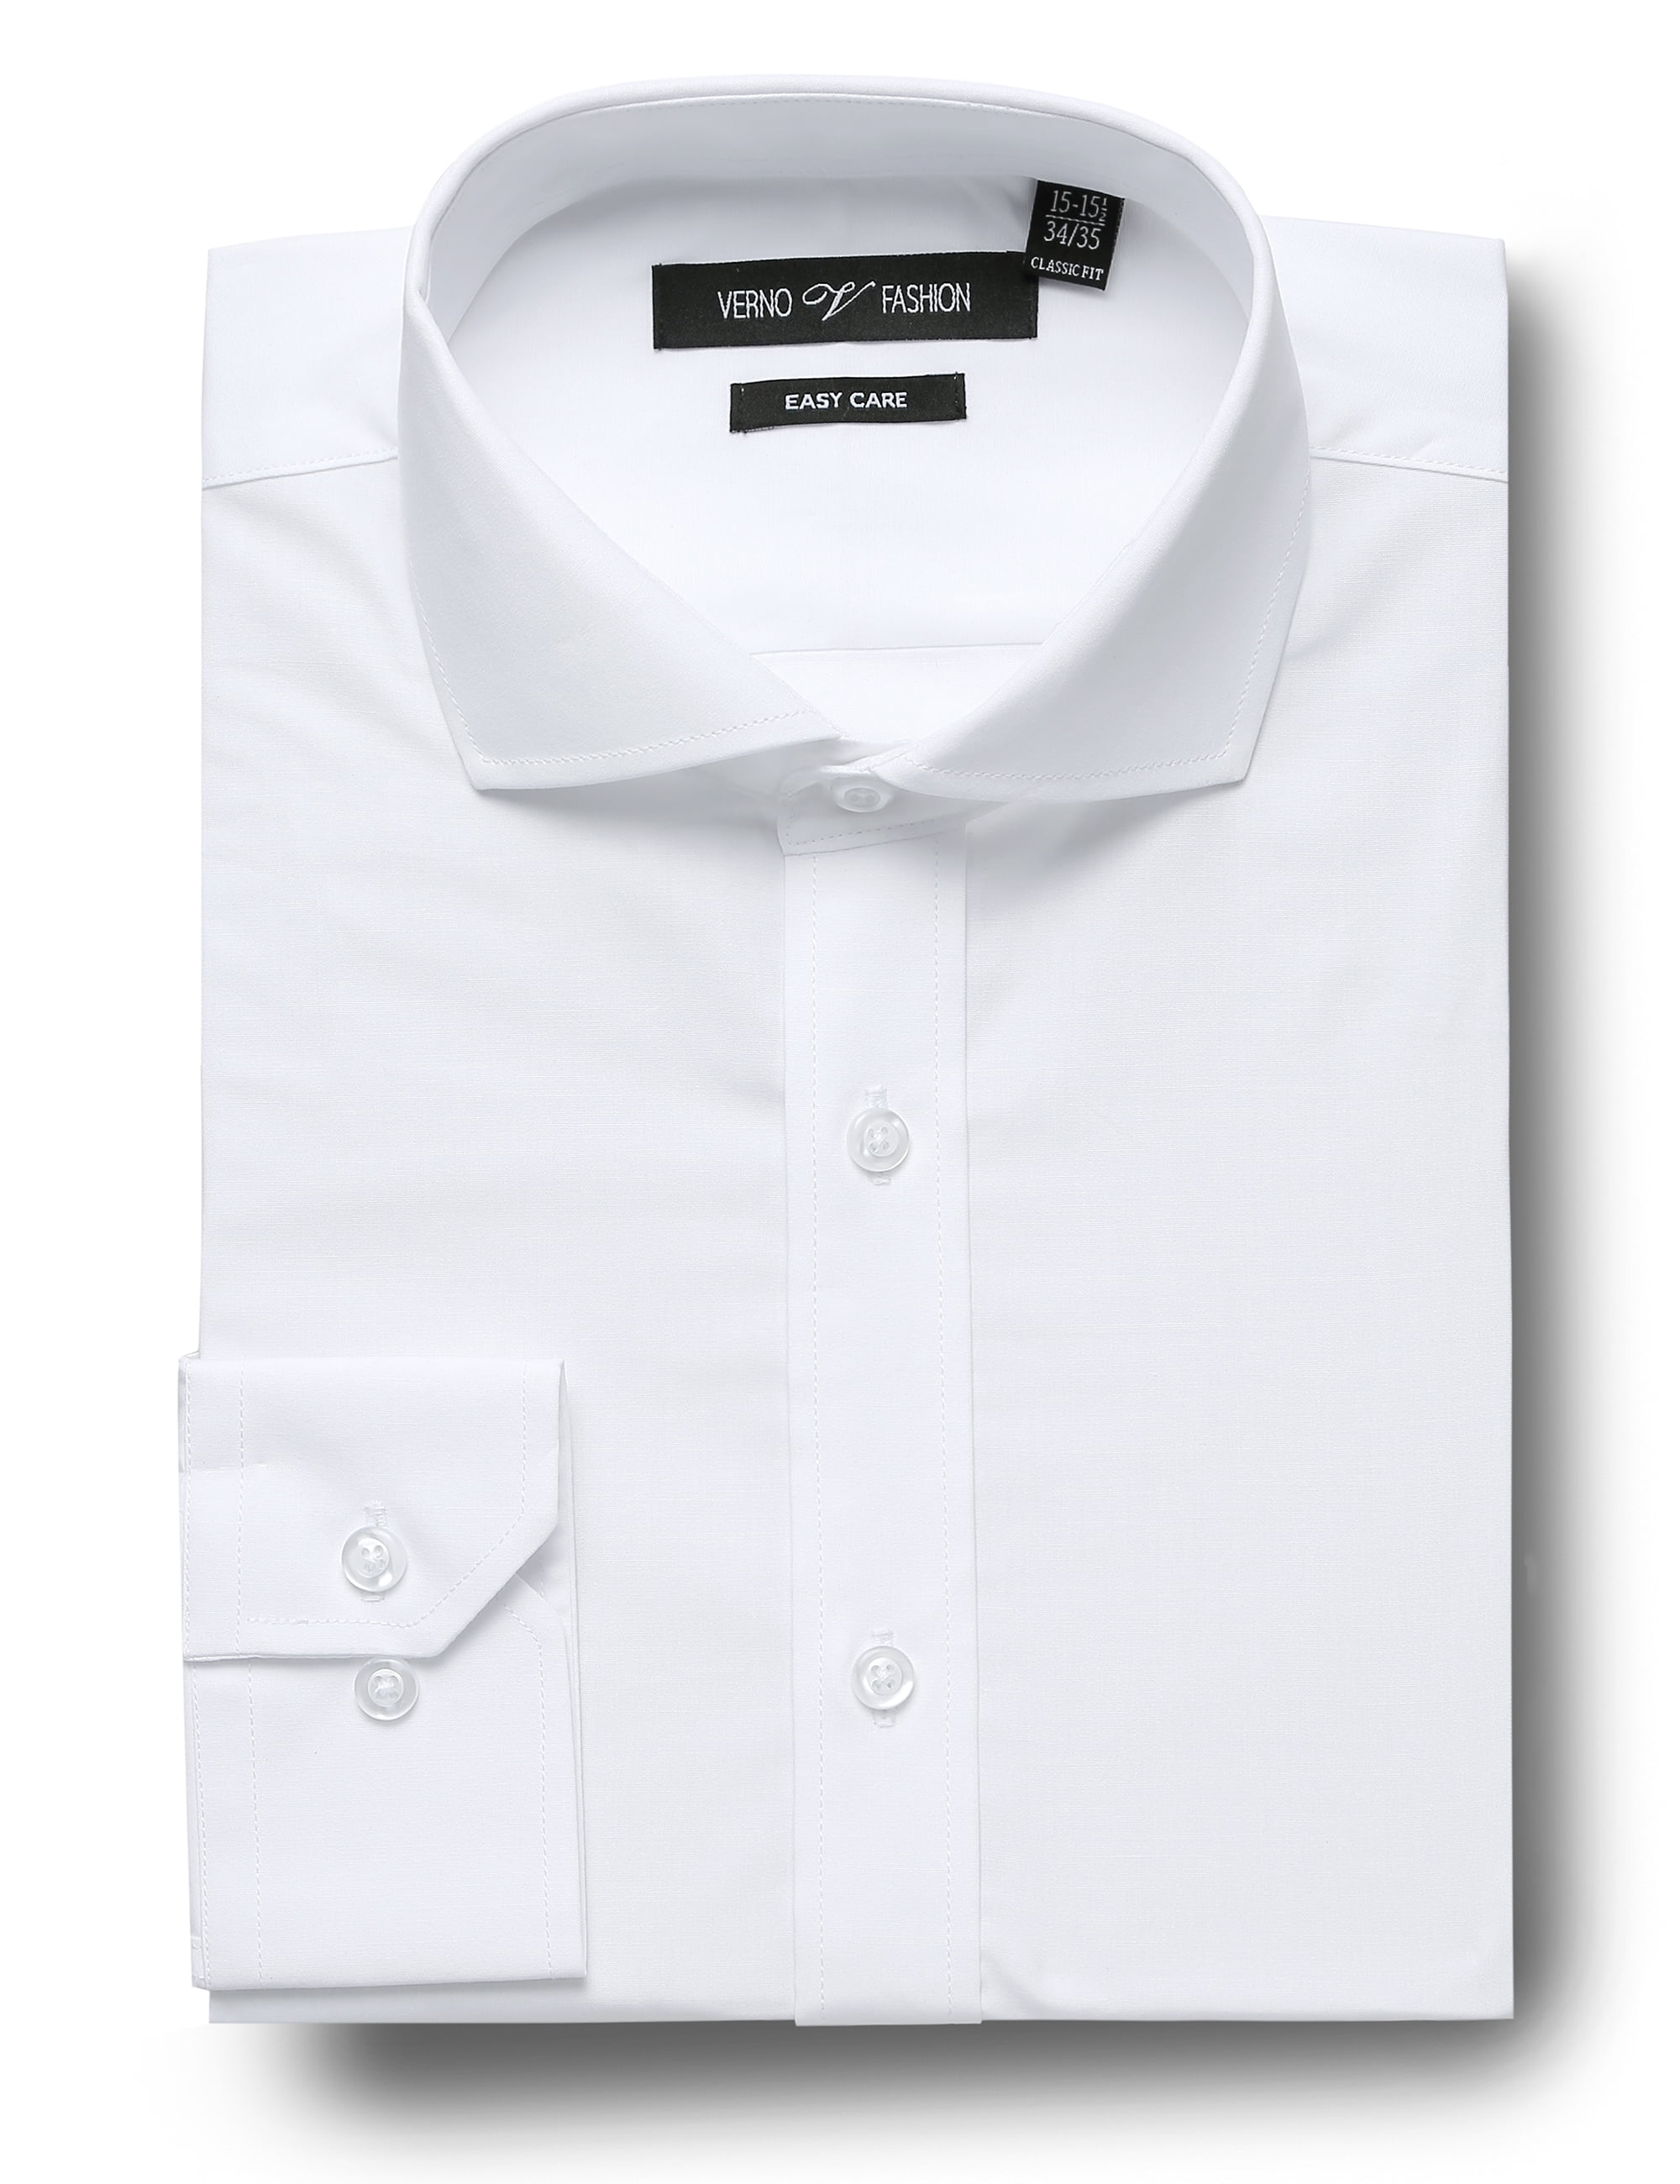 Cotton White Dress Shirt for Men ...